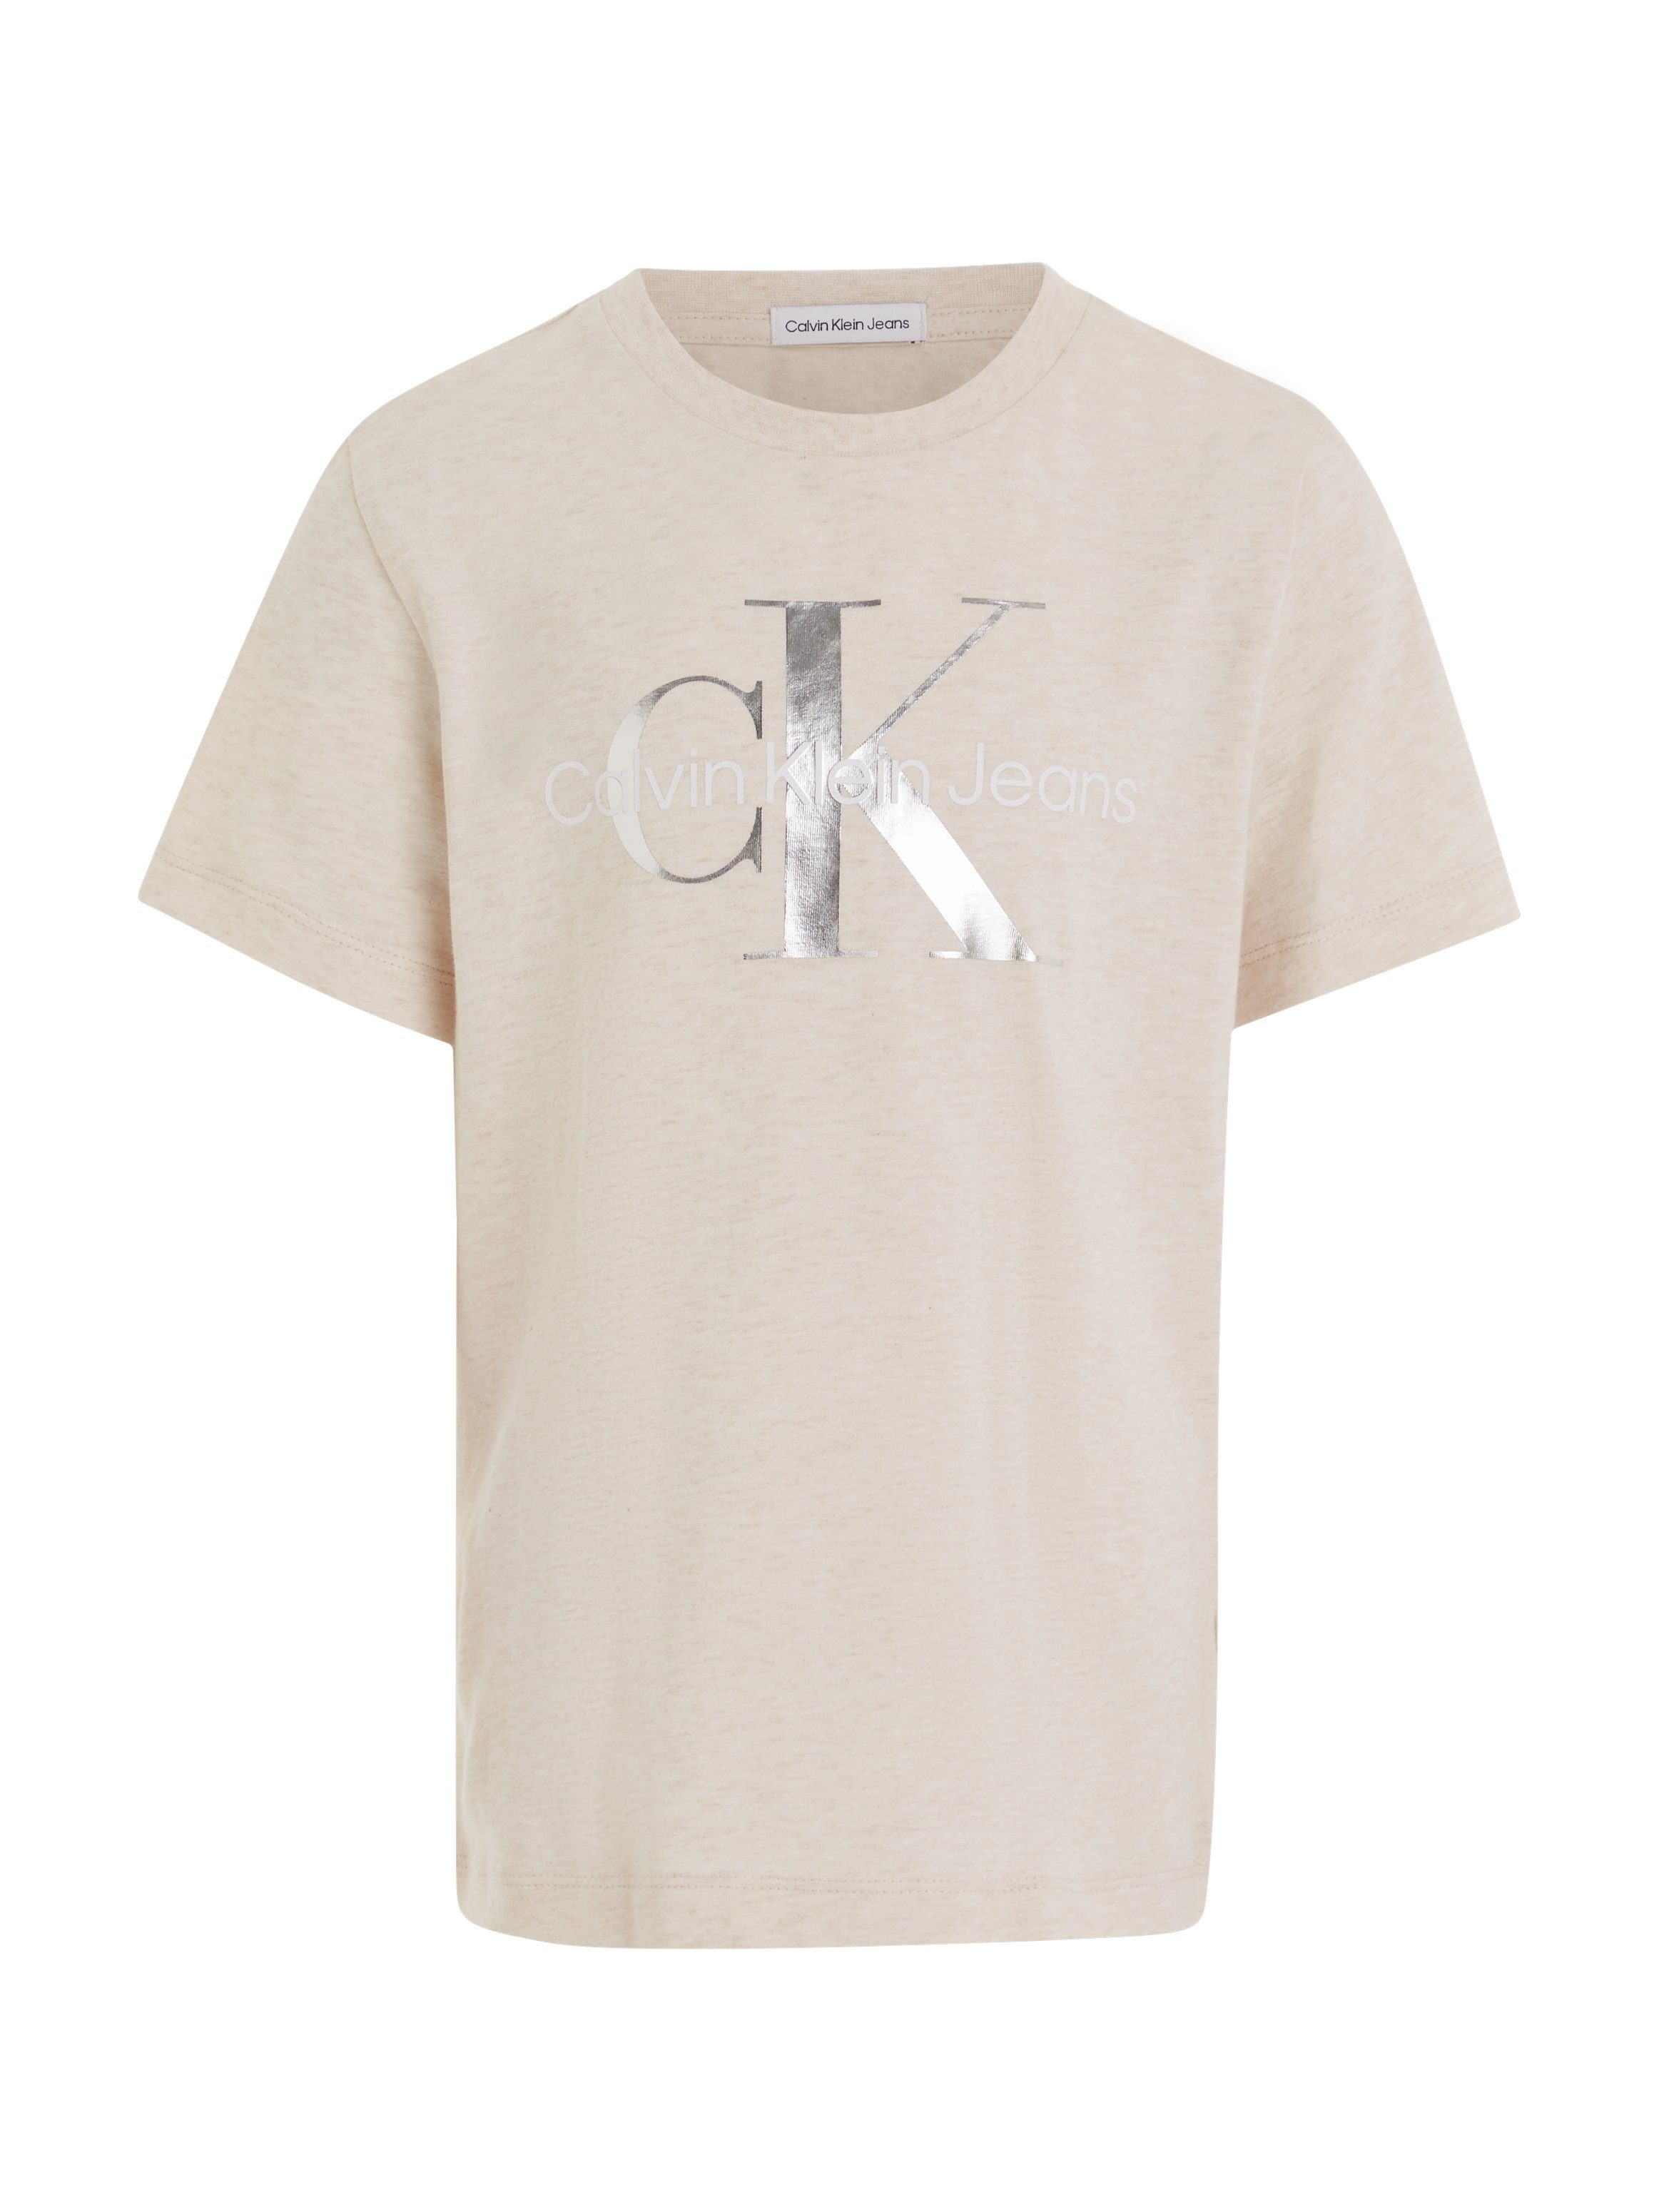 Heather Calvin T-SHIRT Klein Vanilla Jeans MONOGRAM T-Shirt CK SS